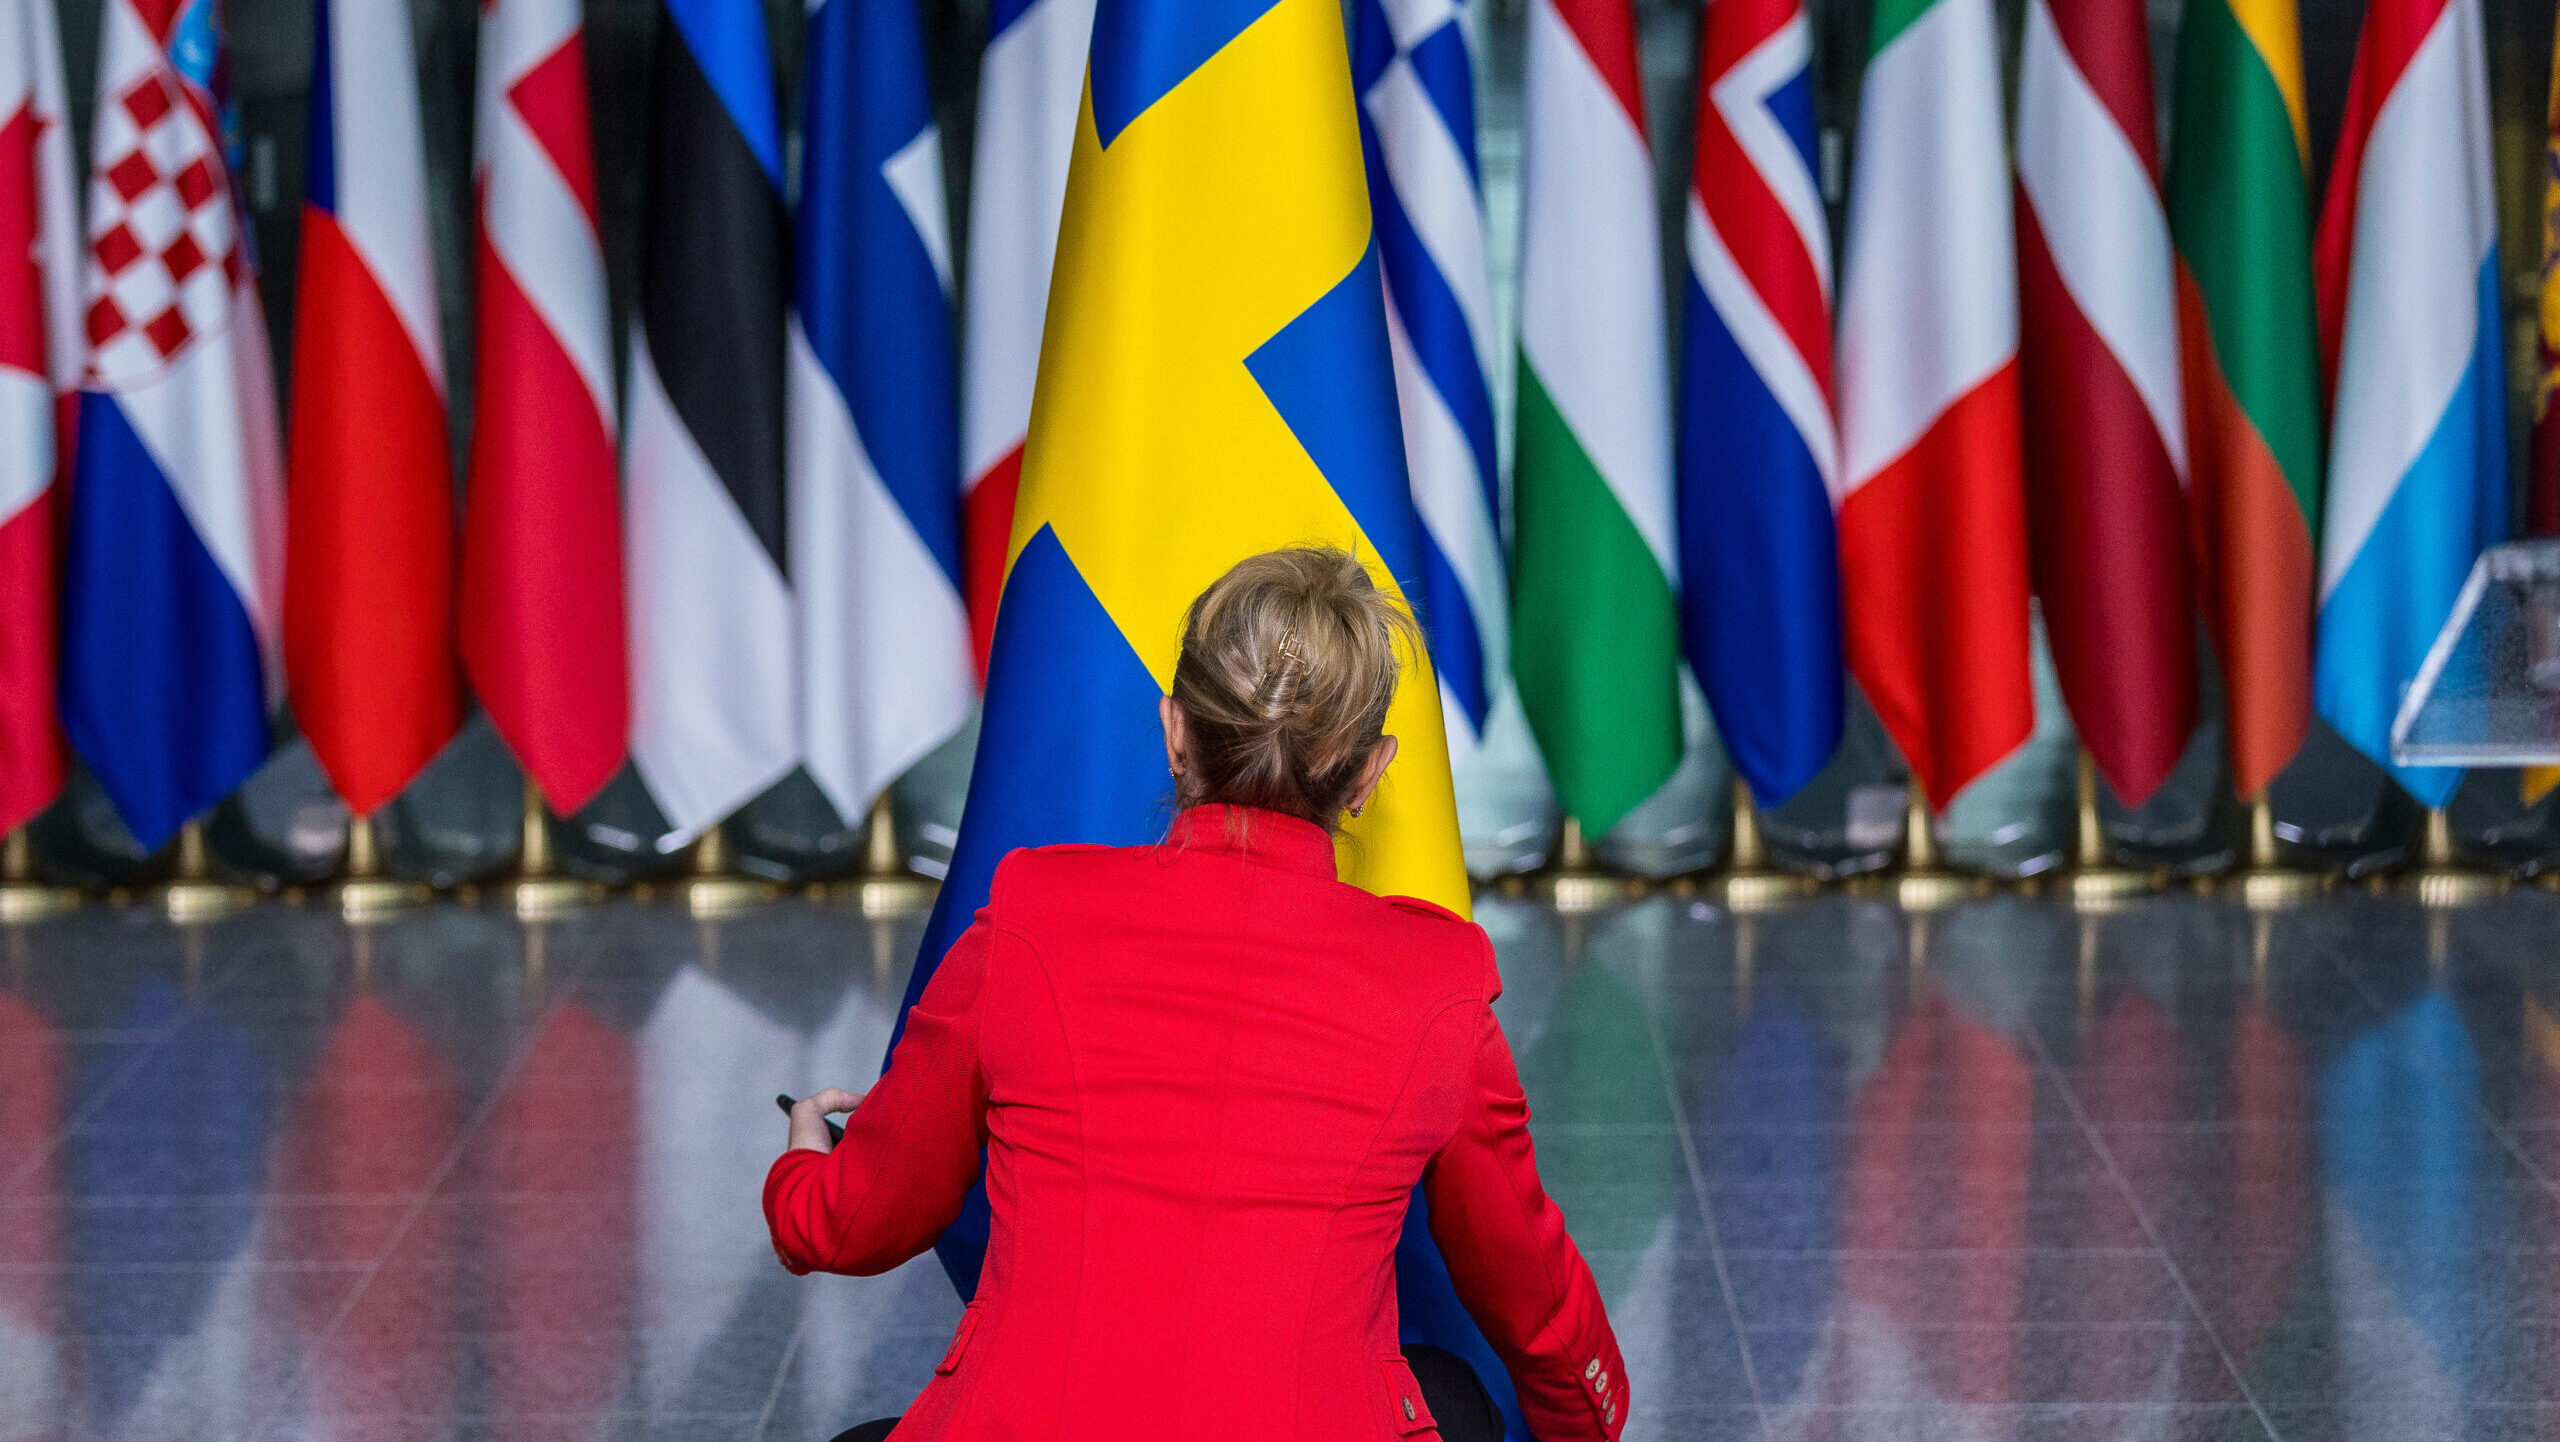 NATO Ceremony Marks Sweden’s New Membership In Military Alliance